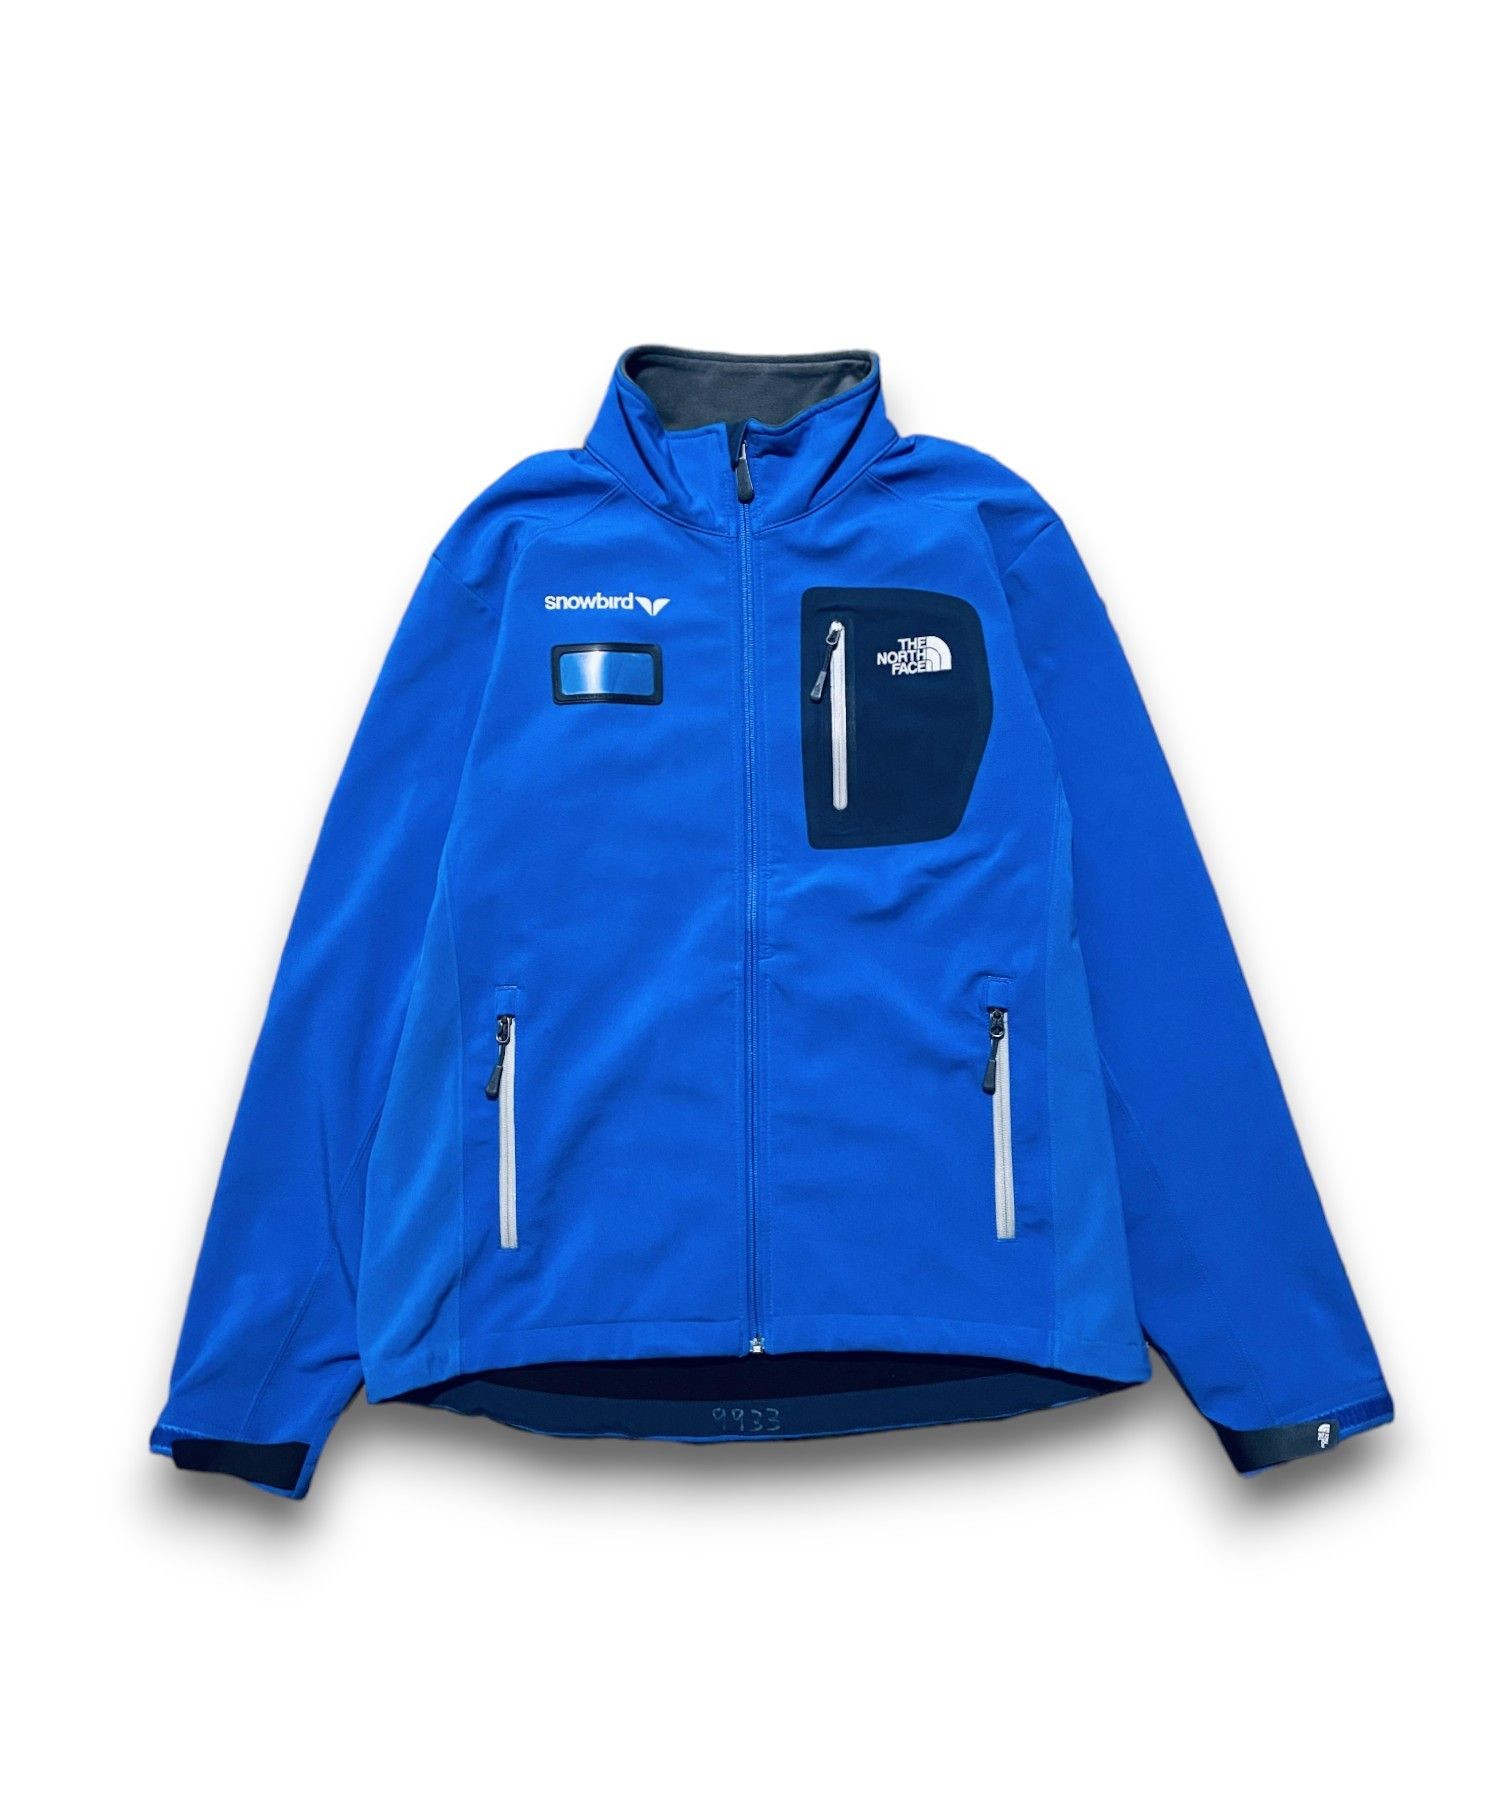 The North Face Jacket Blue Navy Zip Ski Snowbird Coat - 1